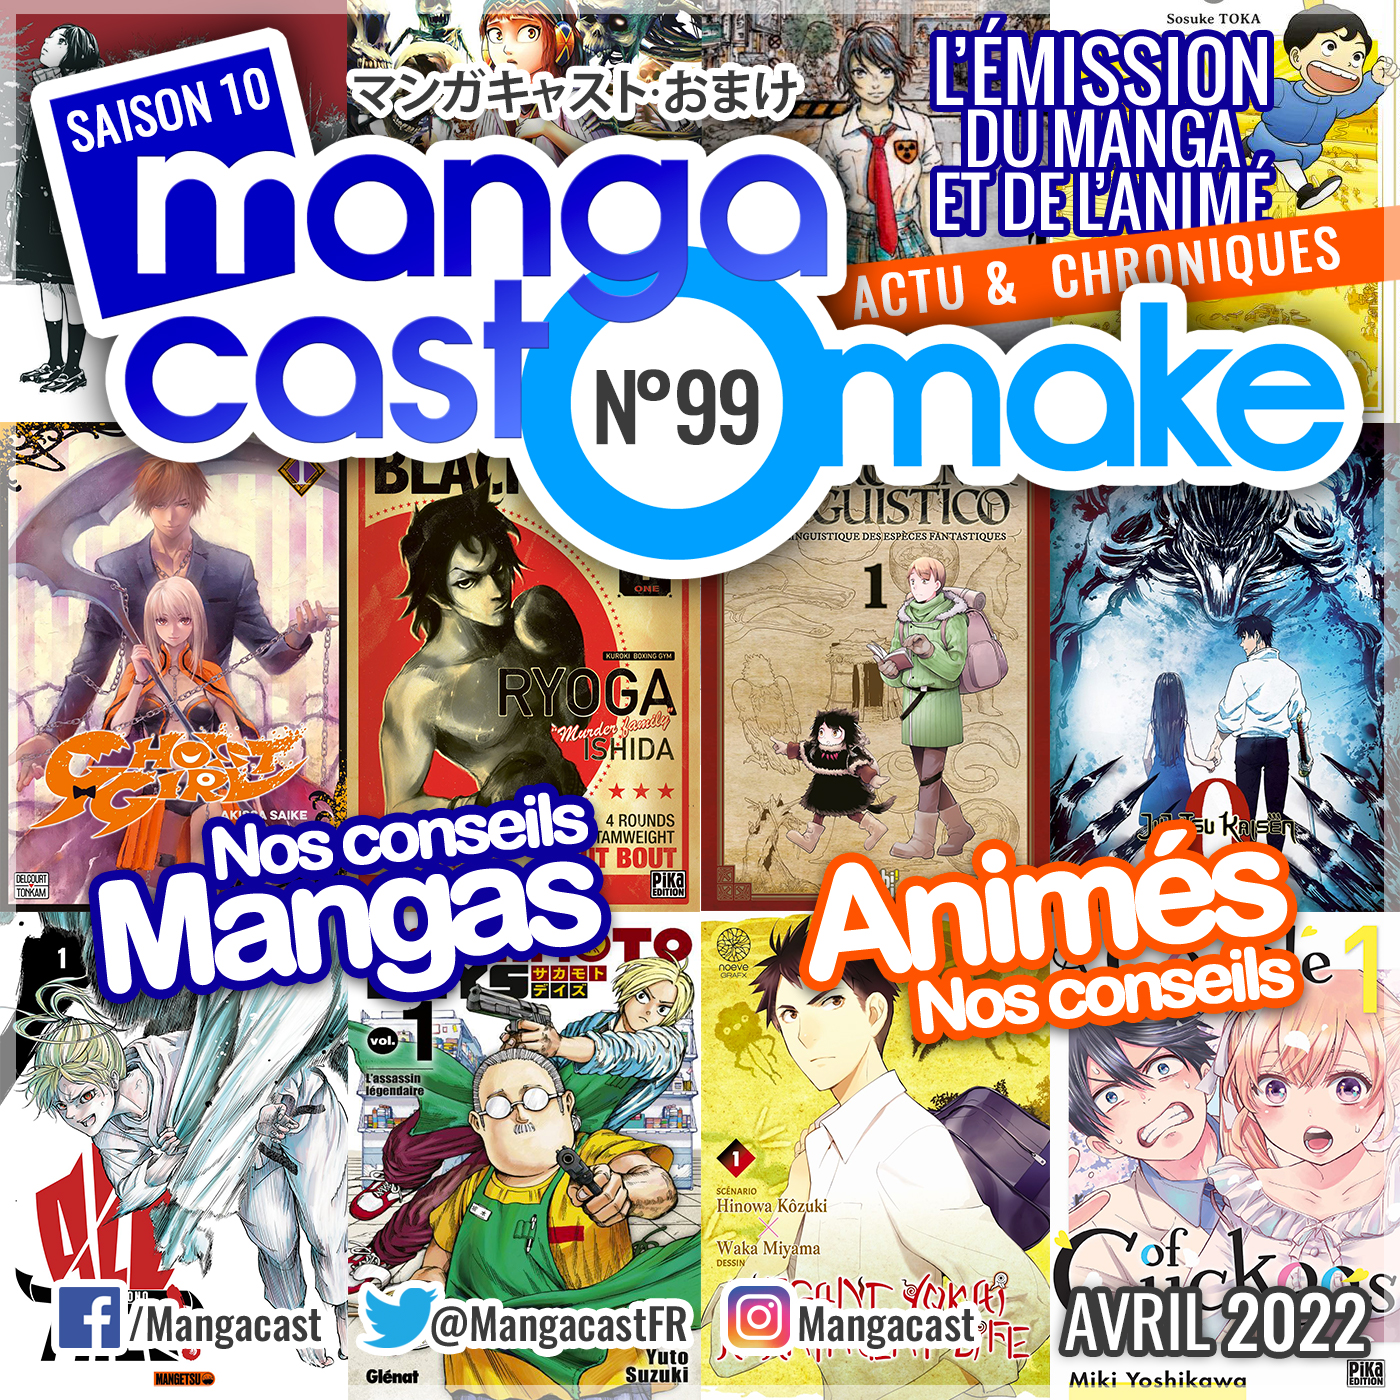 Cartouche du Mangacast Omake n°99